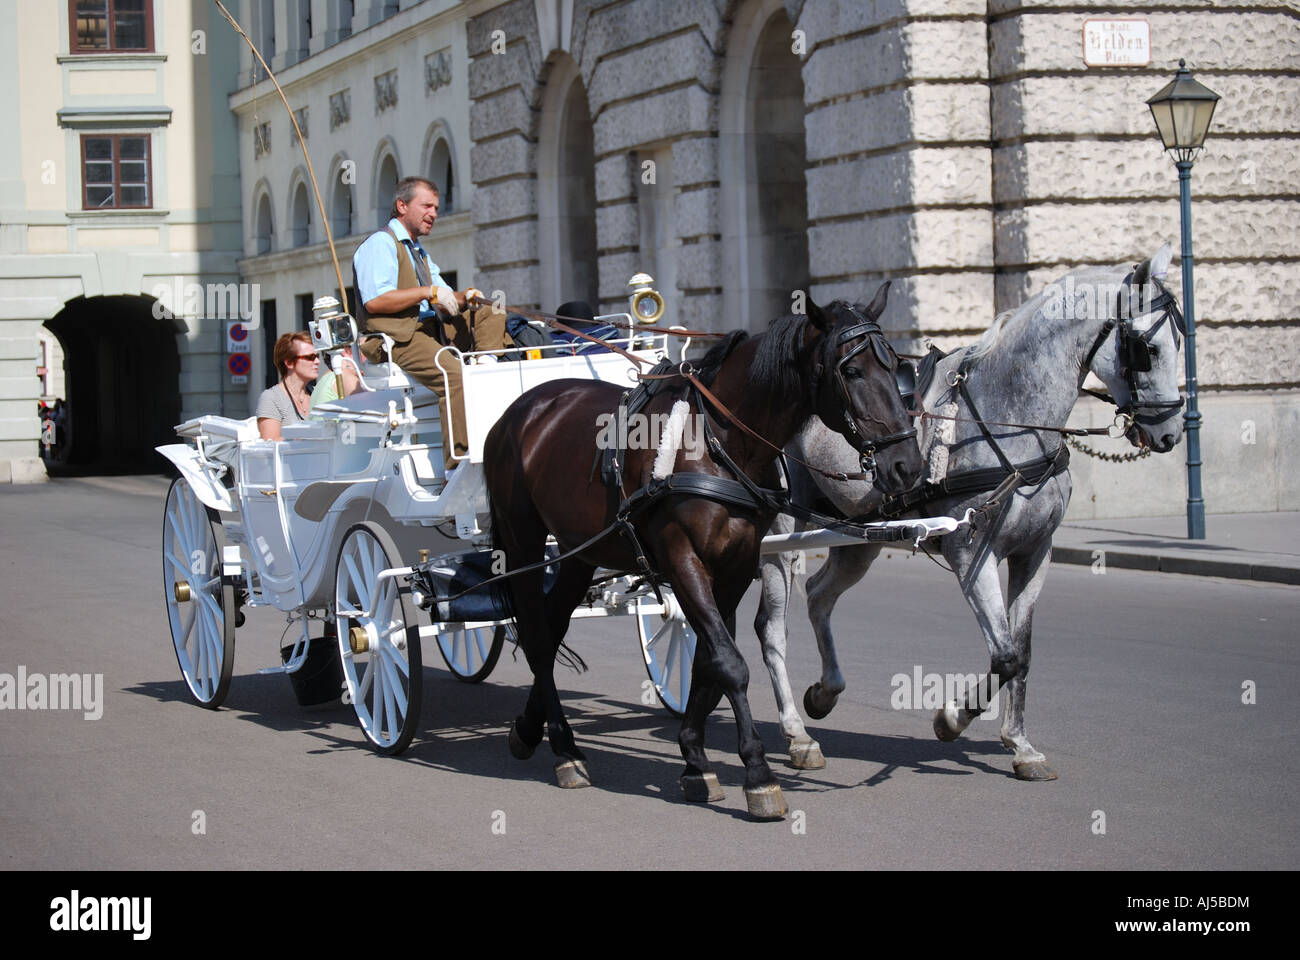 Horse-drawn carriage, Hofburg Palace, Hofburg Quarter, Vienna, Wein, Republic of Austria Stock Photo